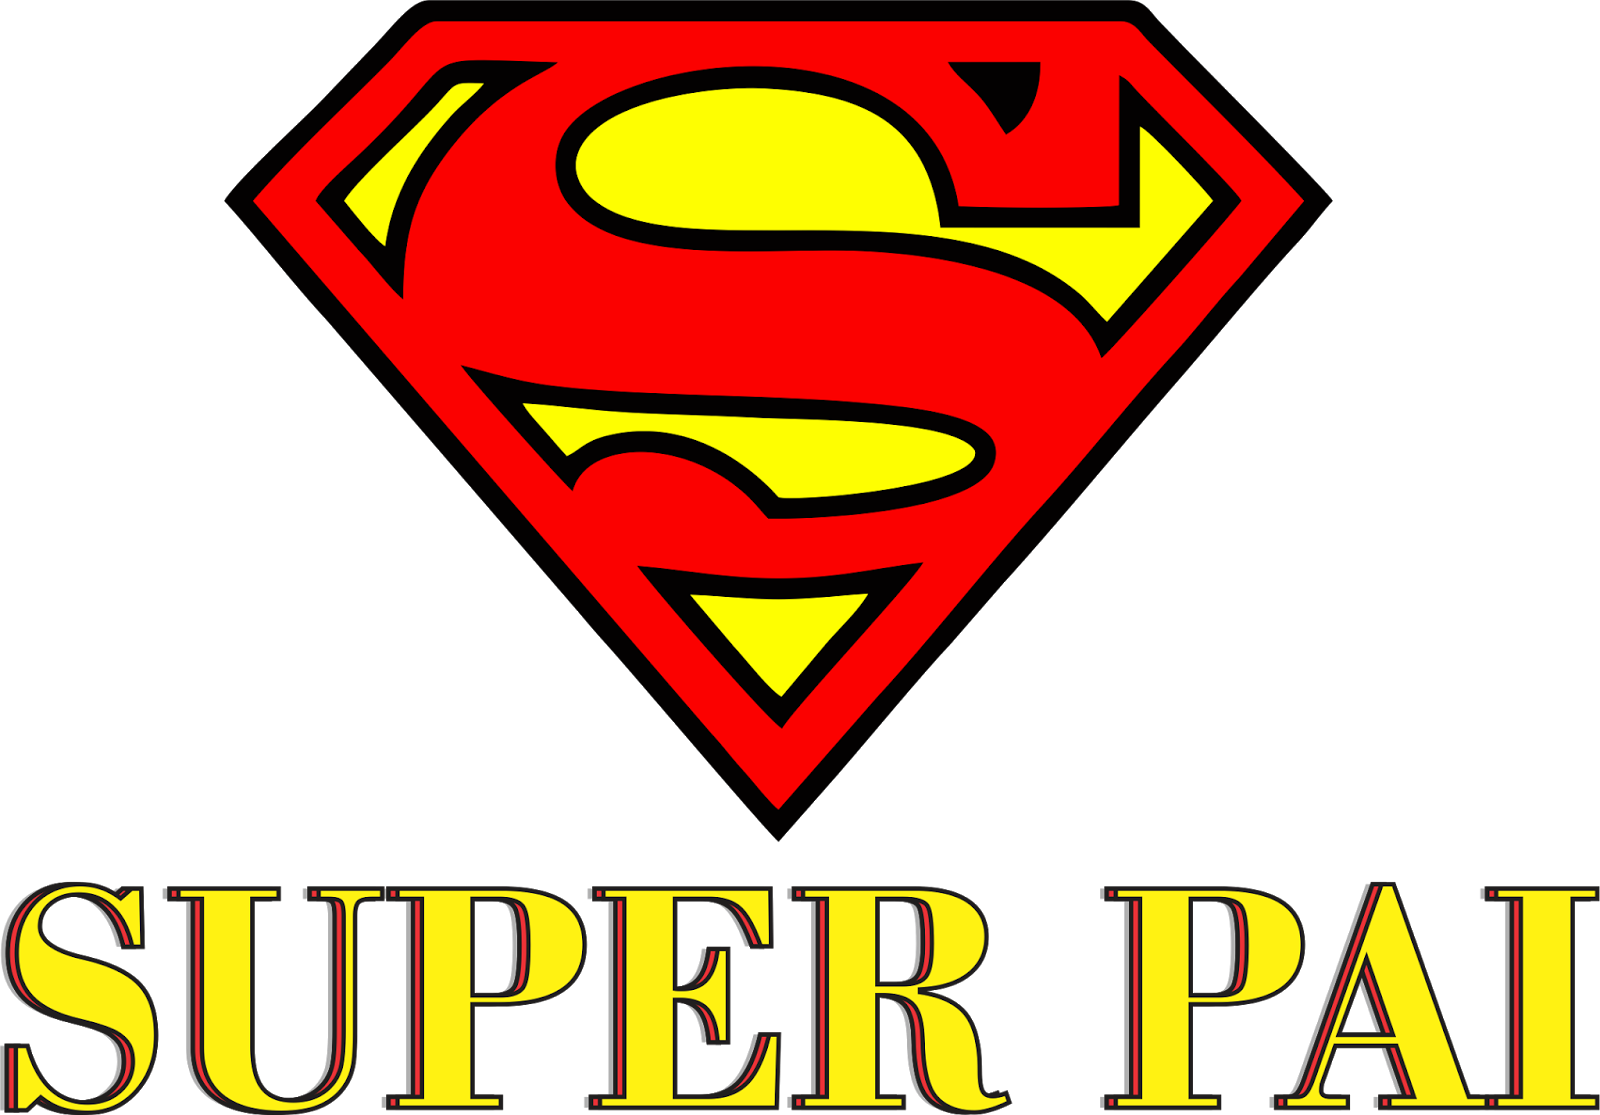 Супермен надпись. Супер надпись. Значок супер папа. Супер мама логотип. Super